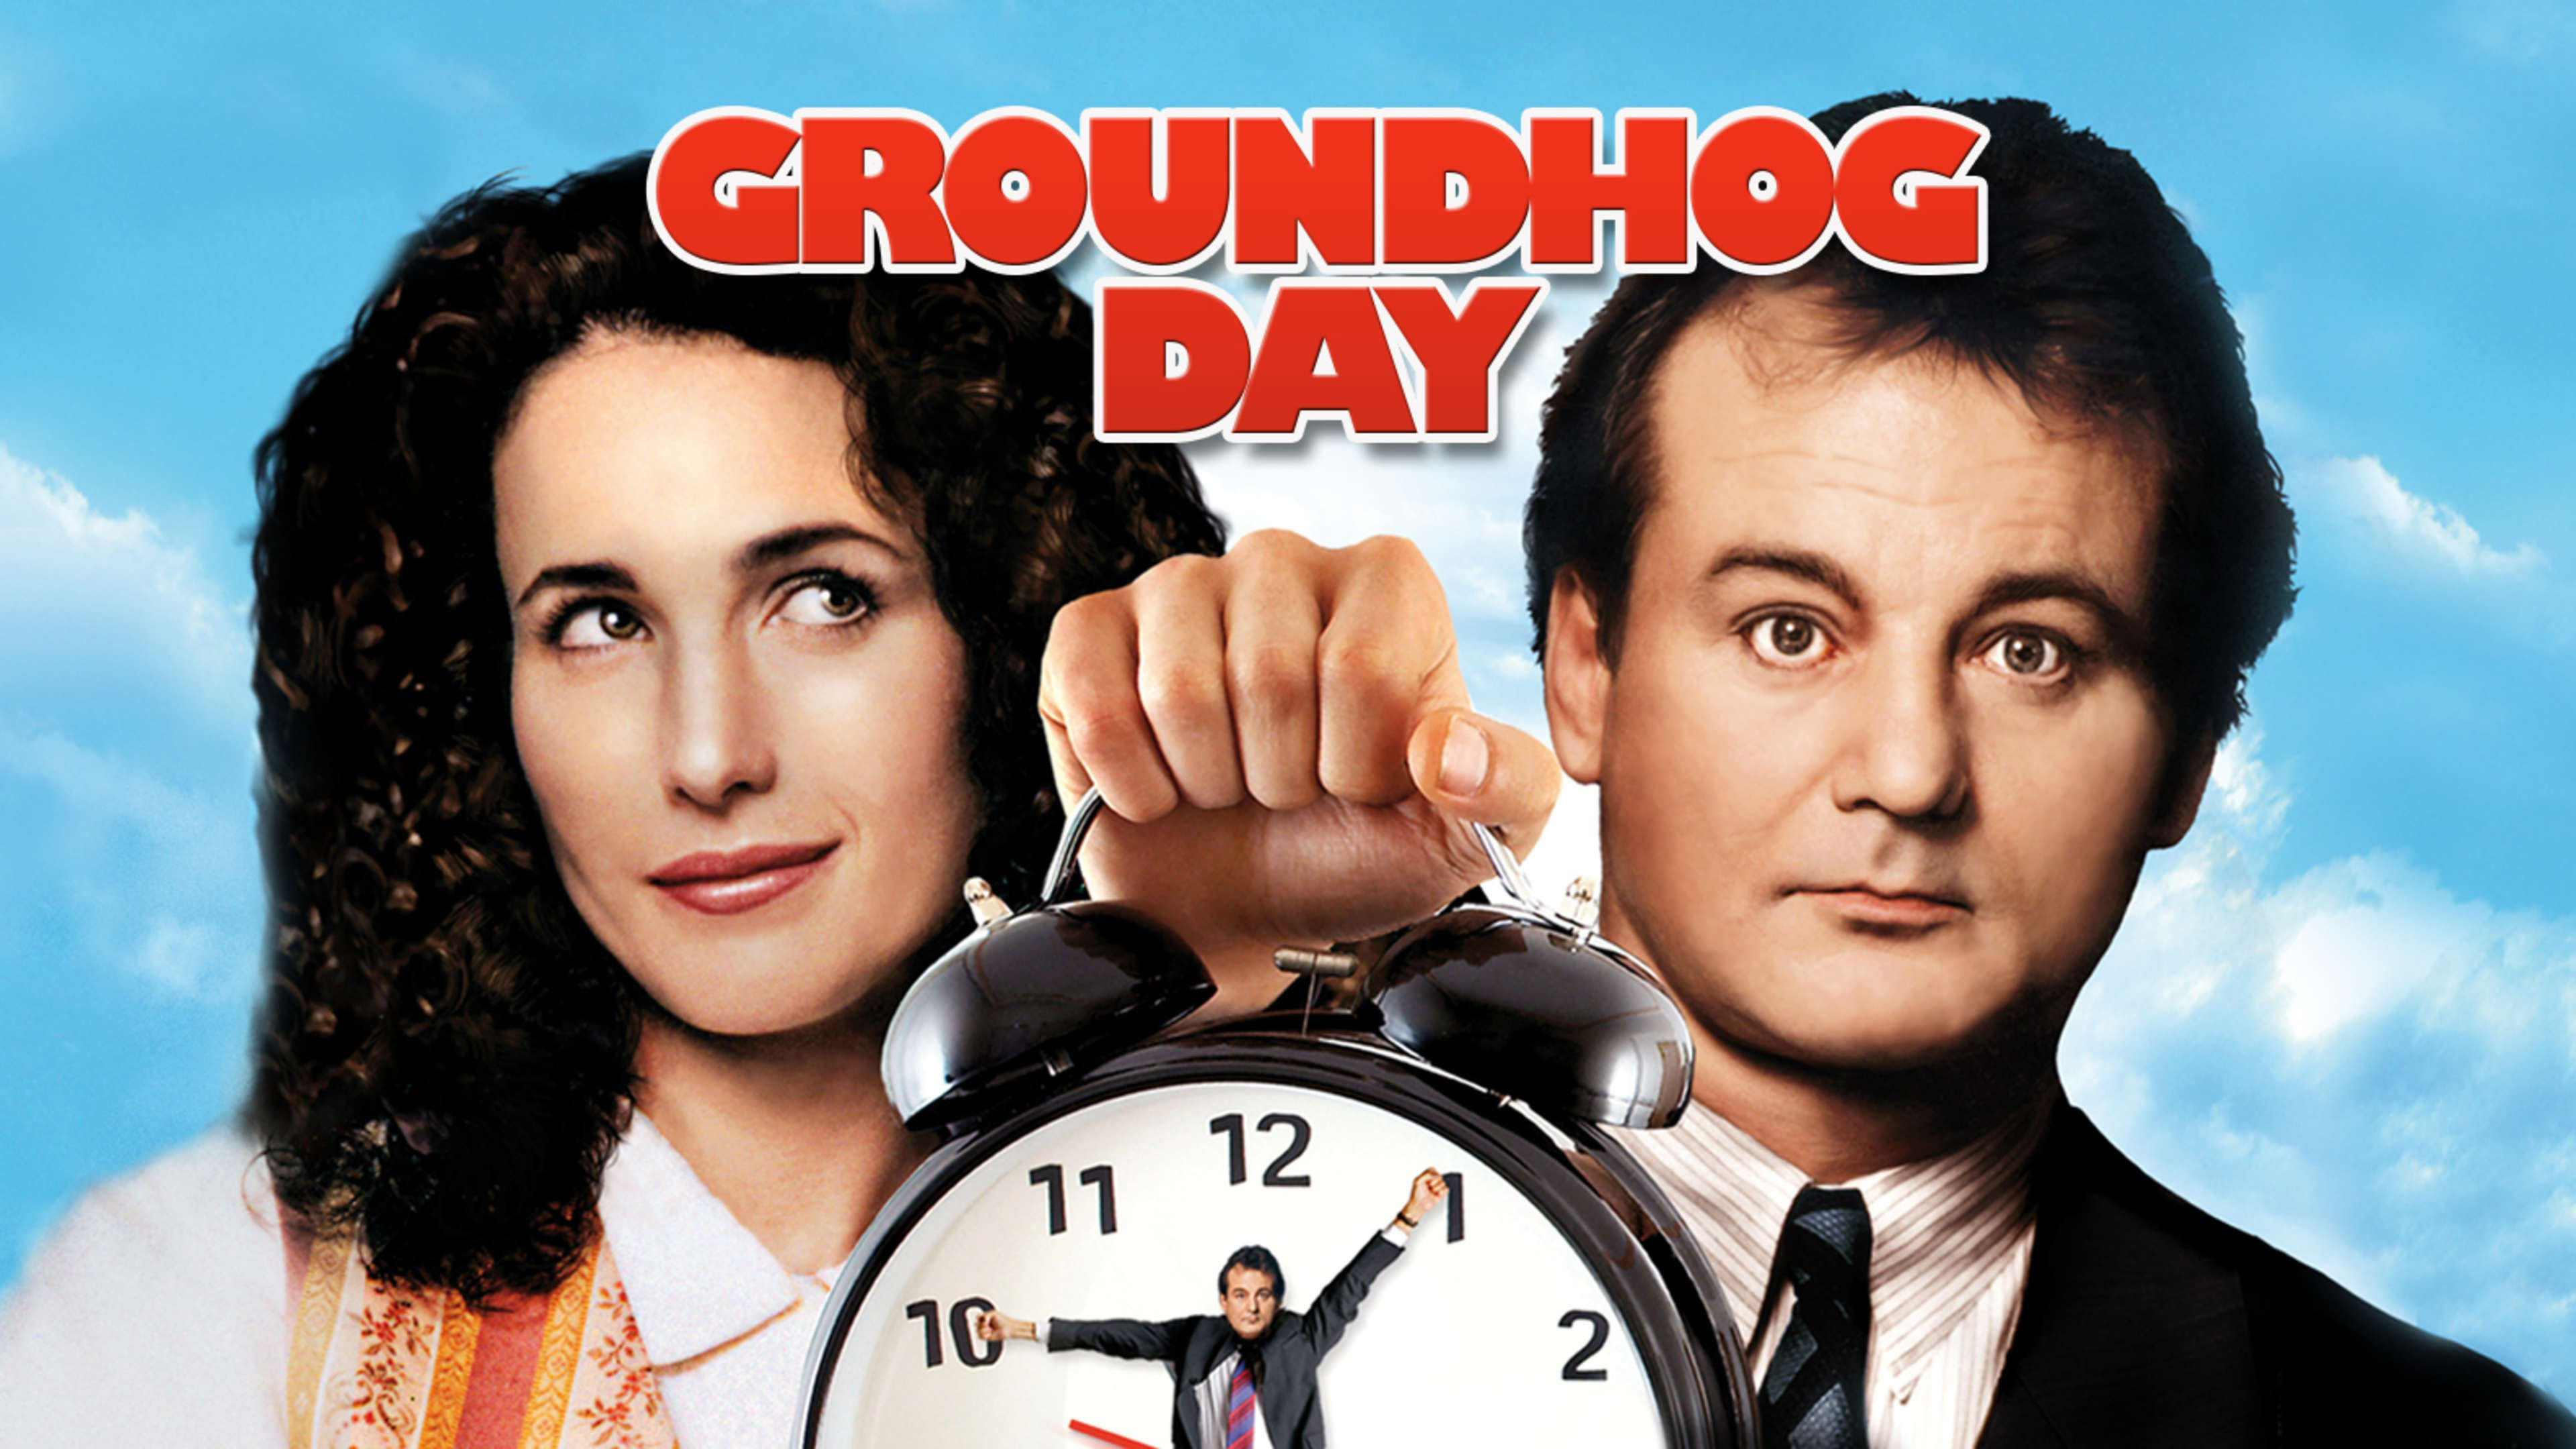 groundhog_day